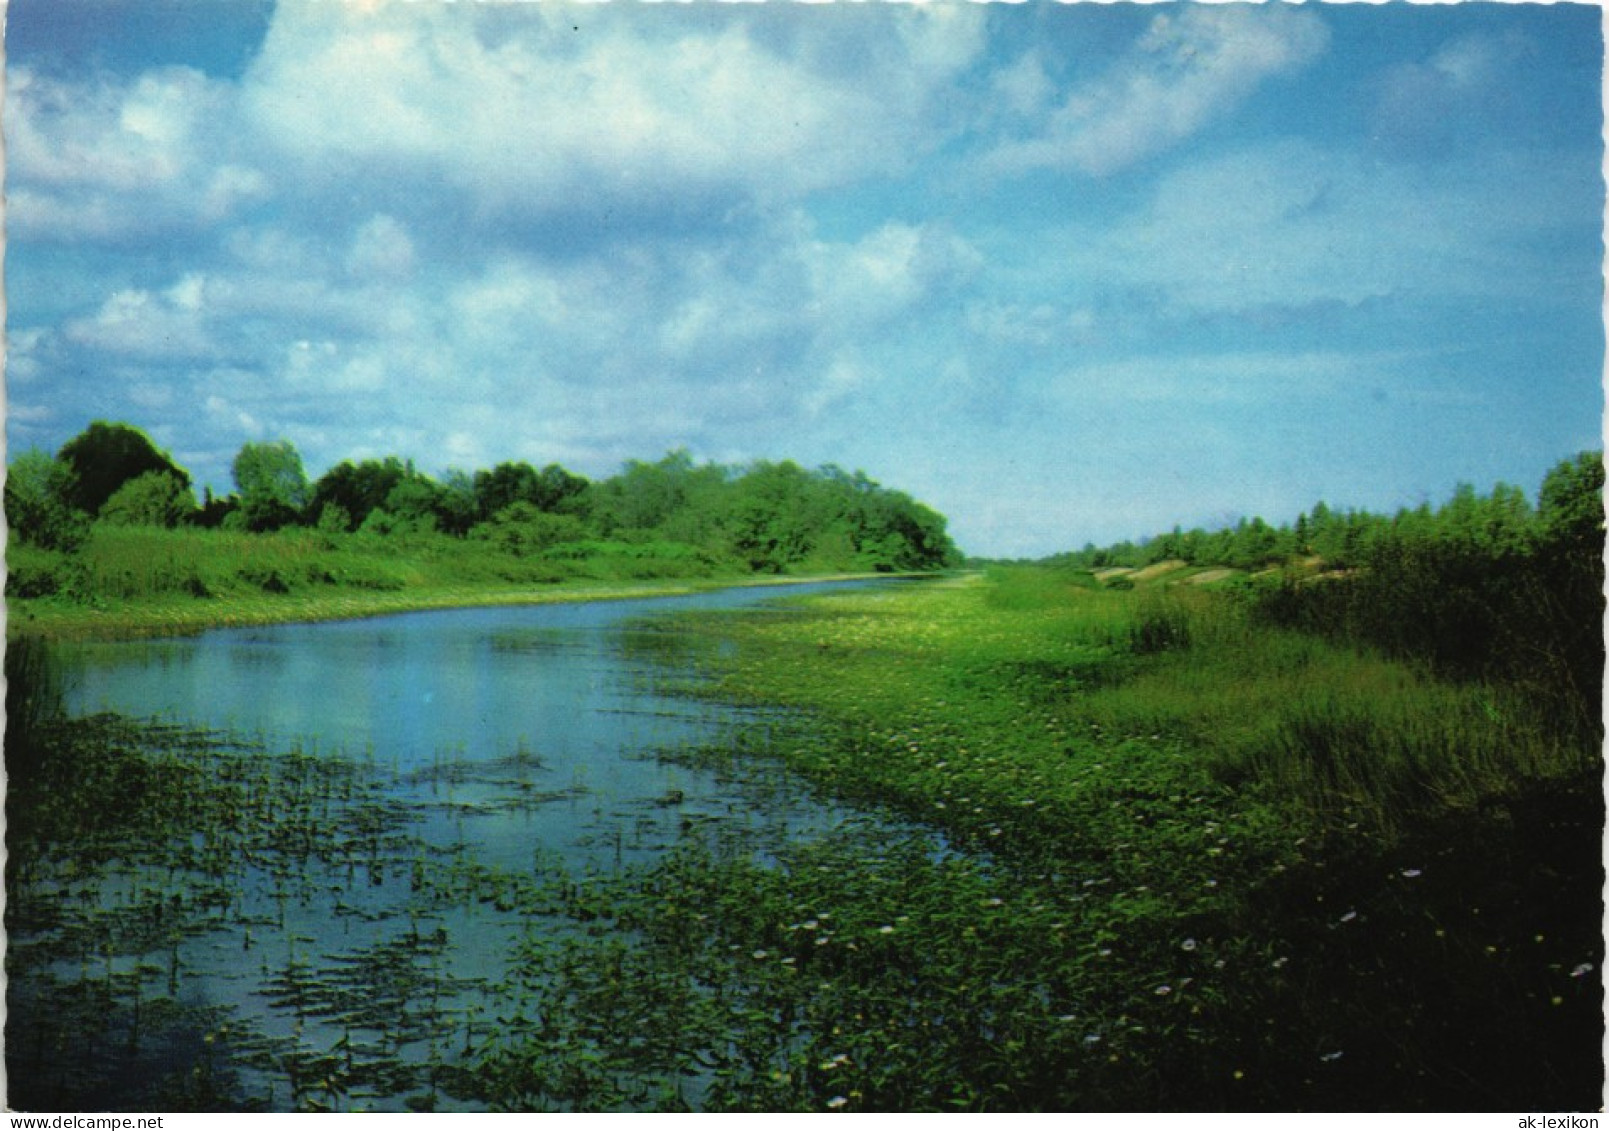 Irrigatiekanaal Te Totness Irrigation Canal "Totness" District Suriname 1970 - Suriname